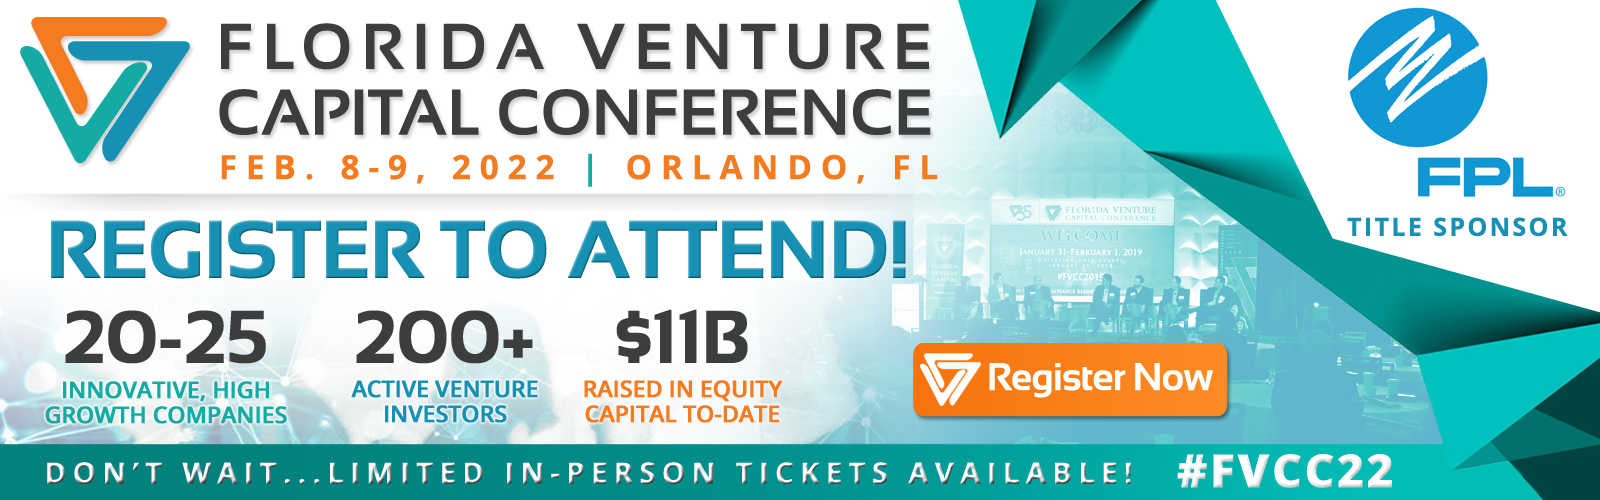 event header graphic - Florida Venture Forum Capital Conference